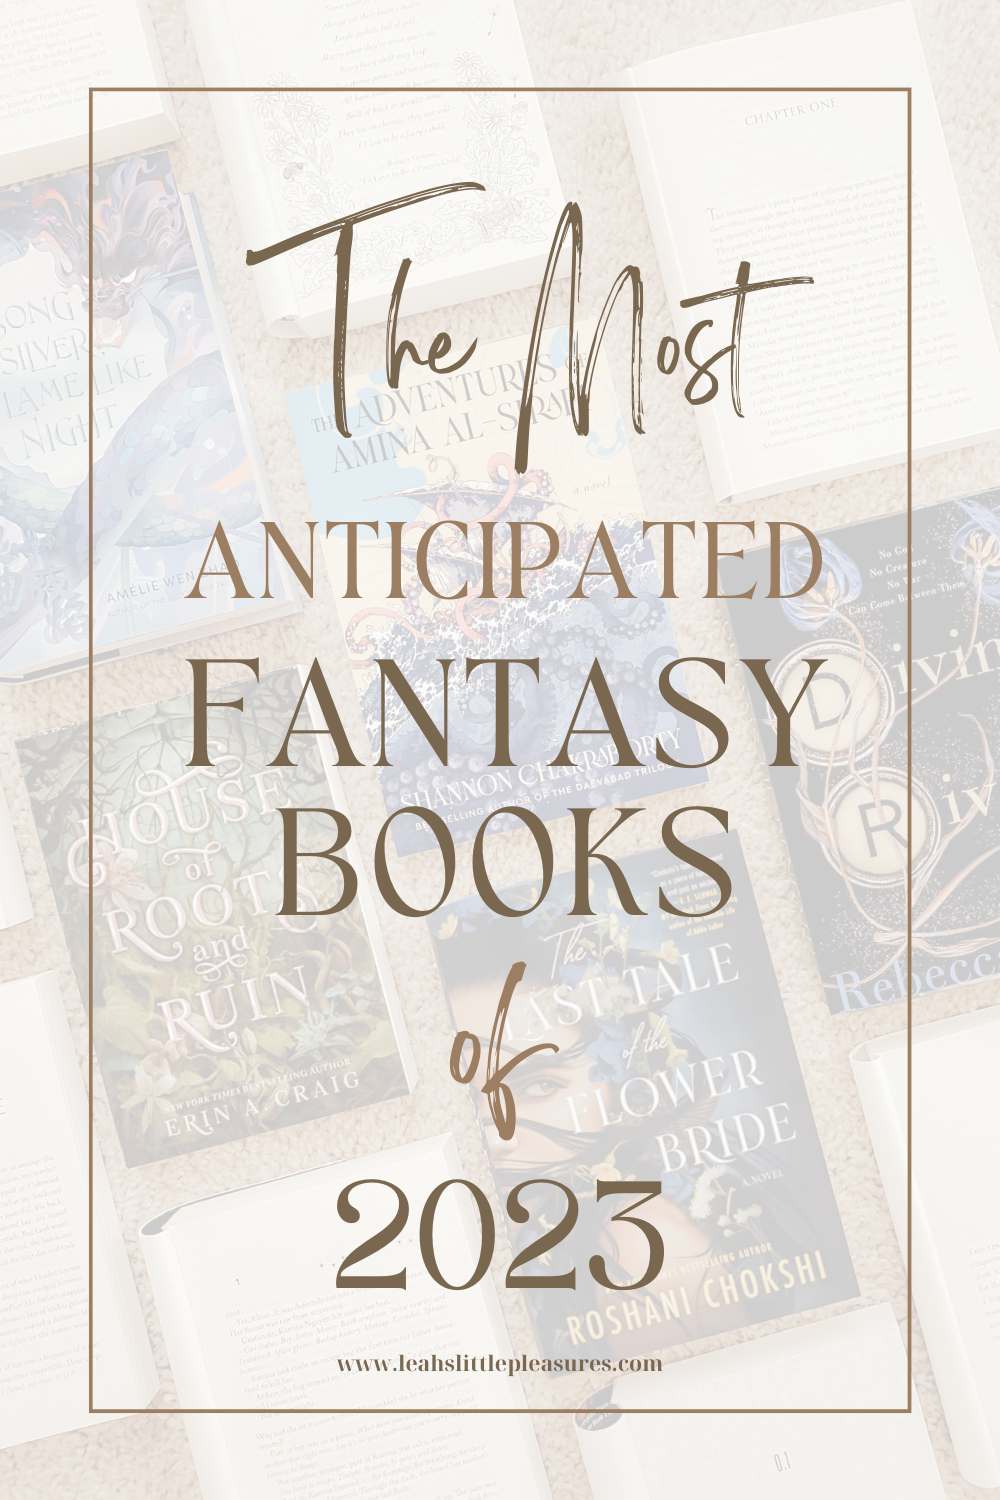 Anticipated Fantasy Books Blog 2023.png